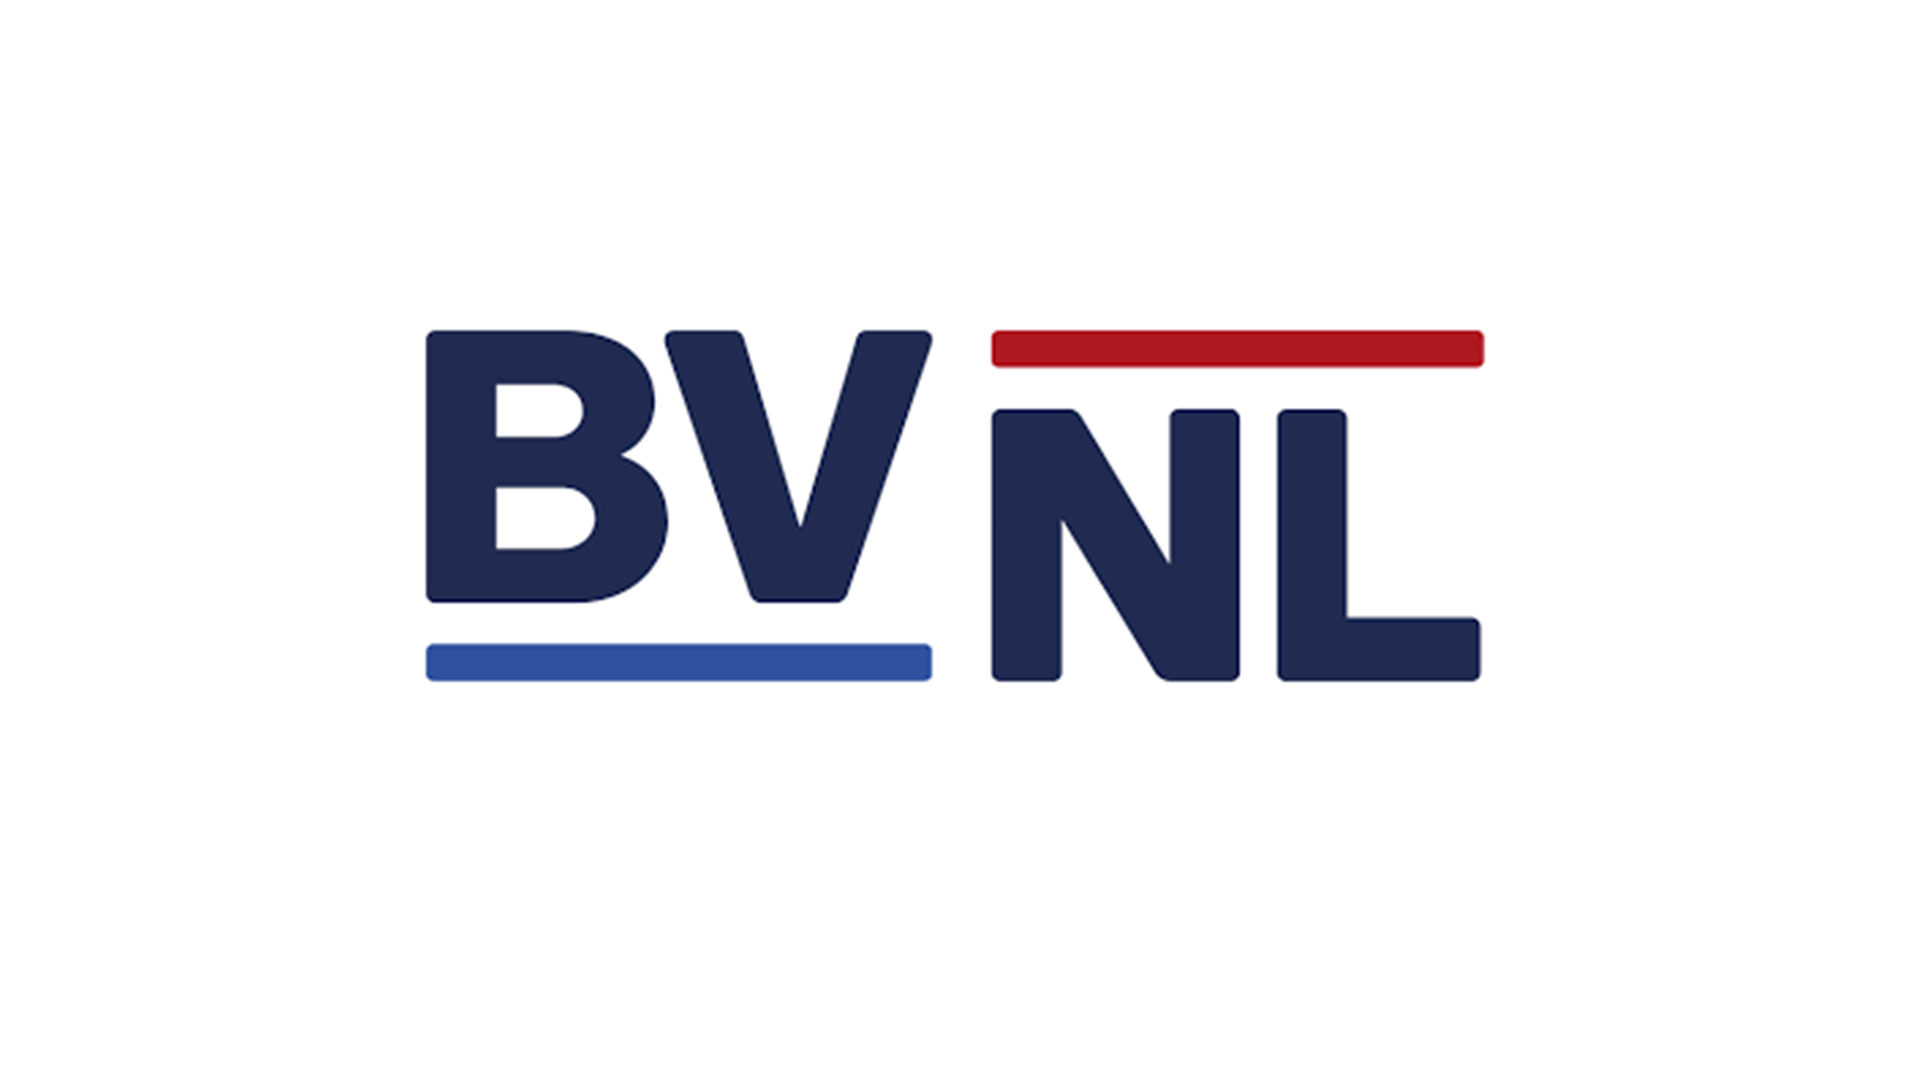 BVNL logo